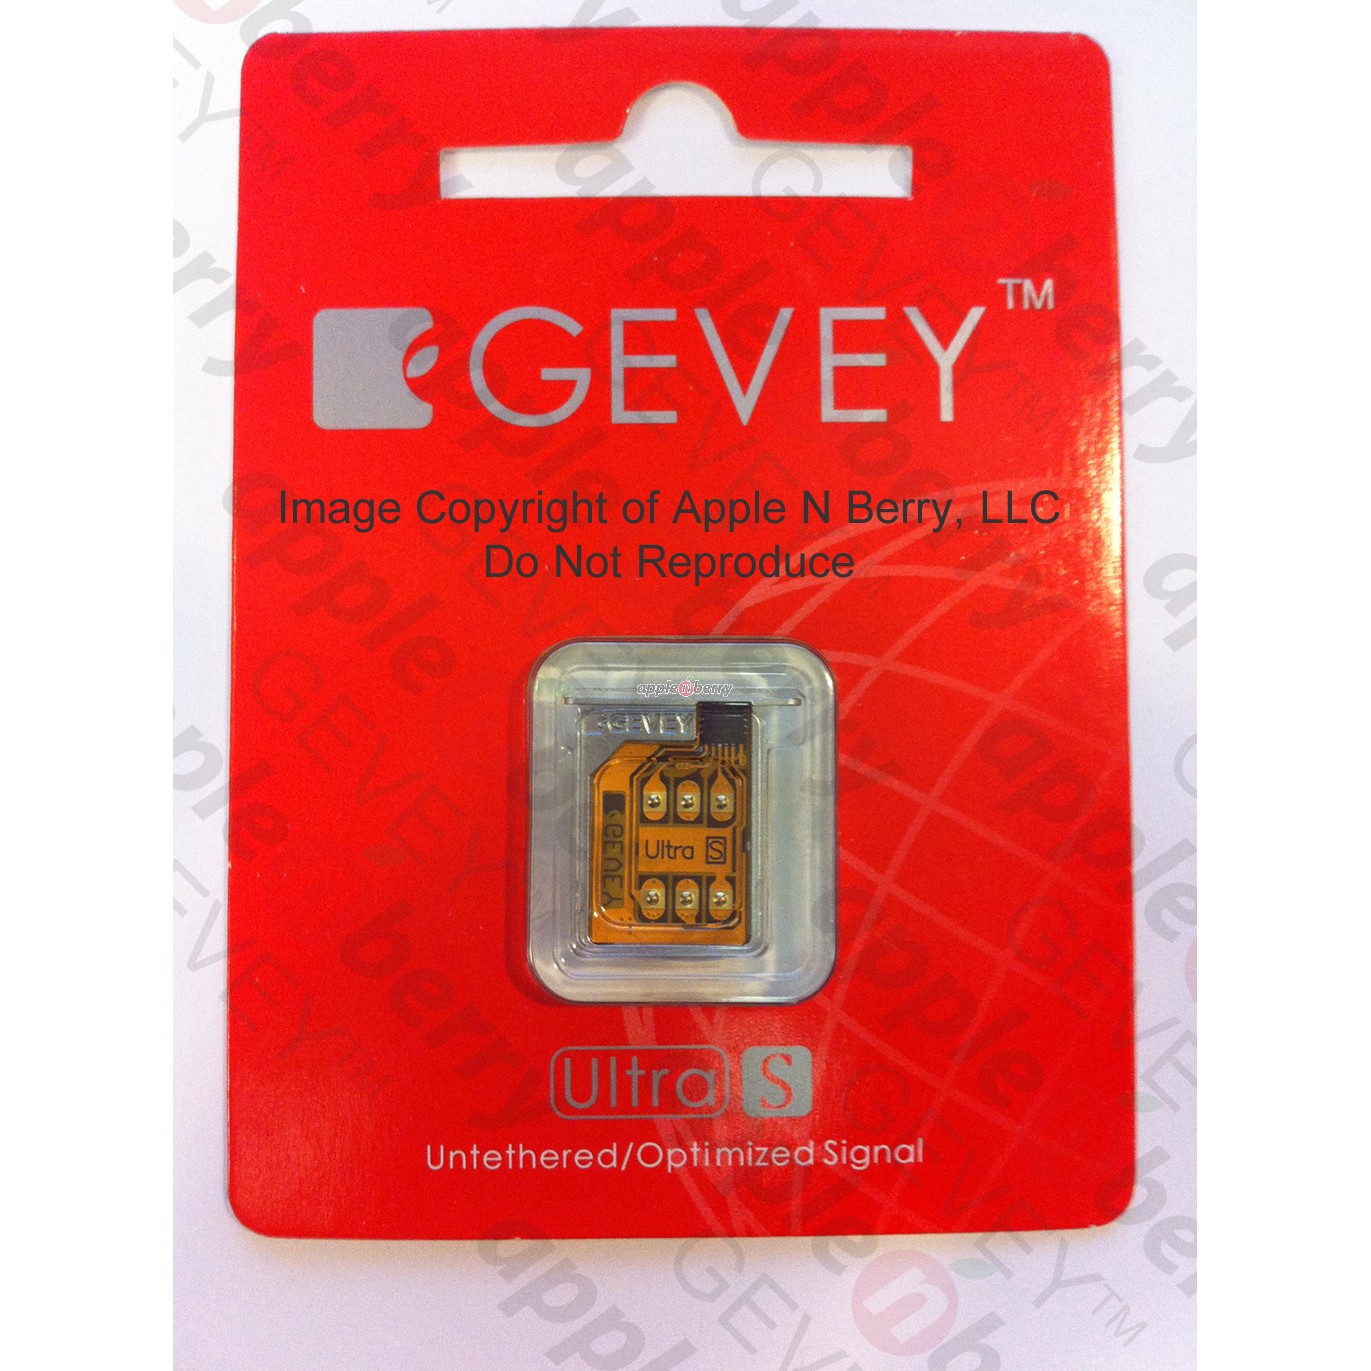 Gevey Ultra S CDMA